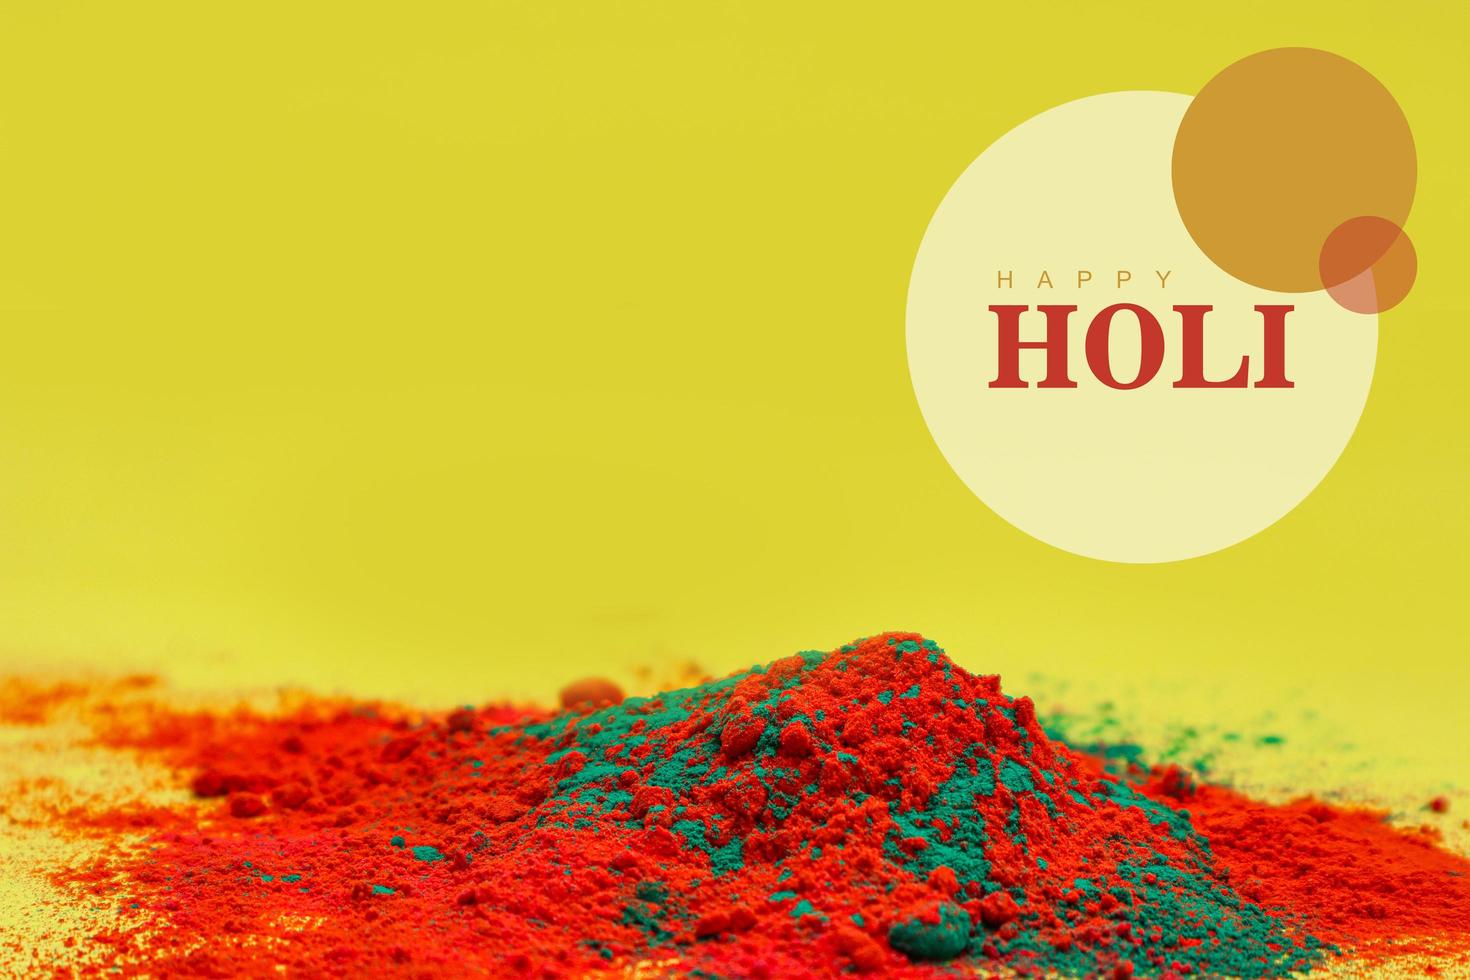 indian festival holi concept multi color's bowl met kleurrijke achtergrond en schrijven happy holi foto